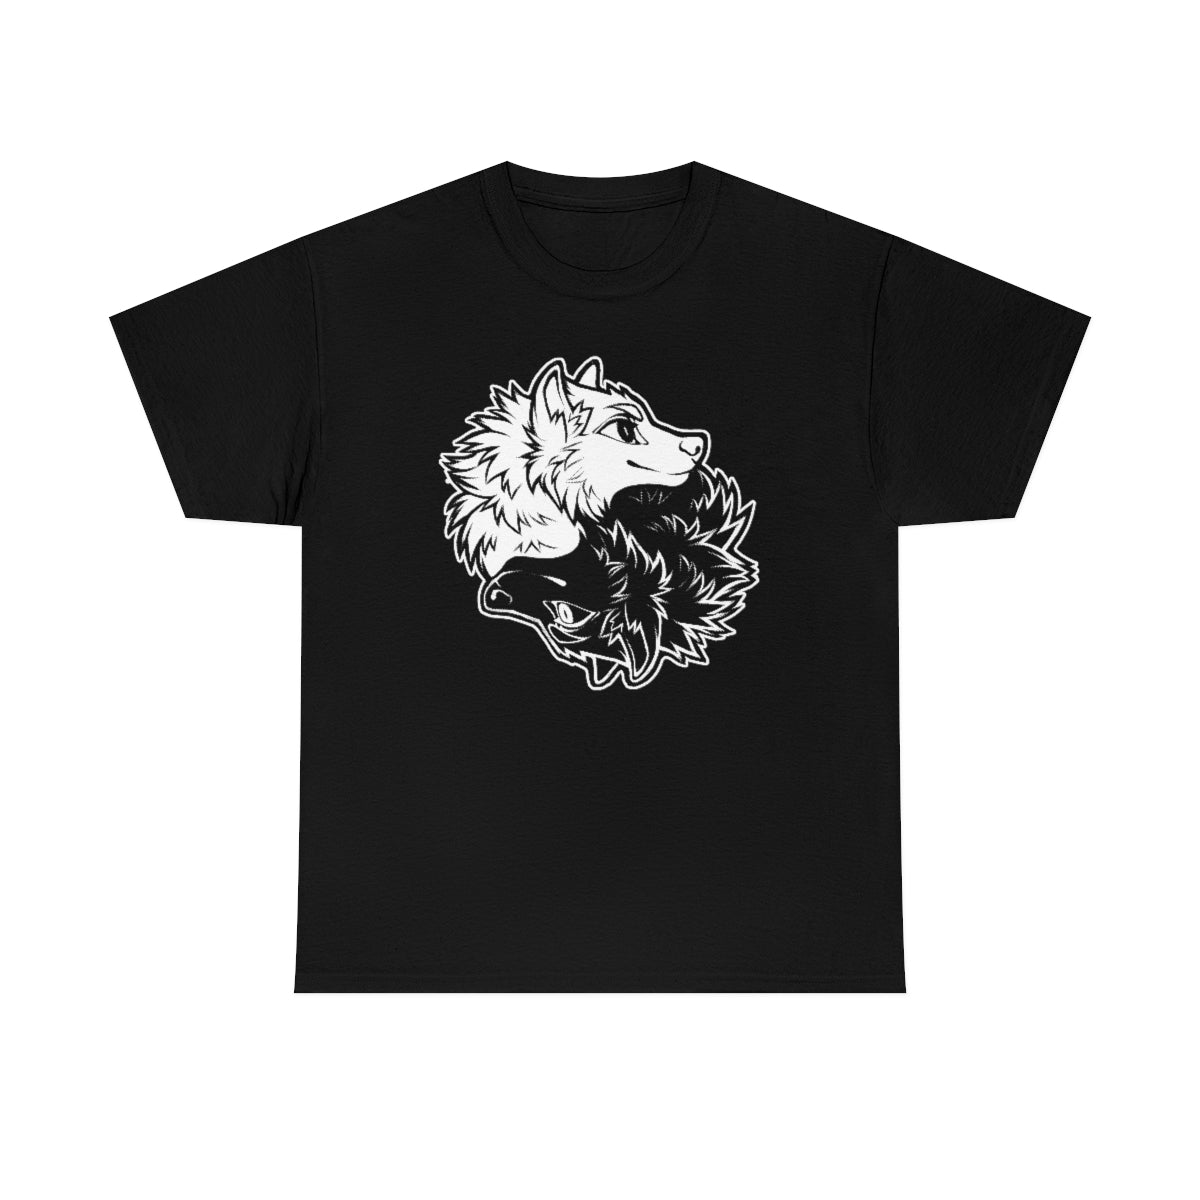 Ying Yang Wolves - T-Shirt T-Shirt Artworktee Black S 